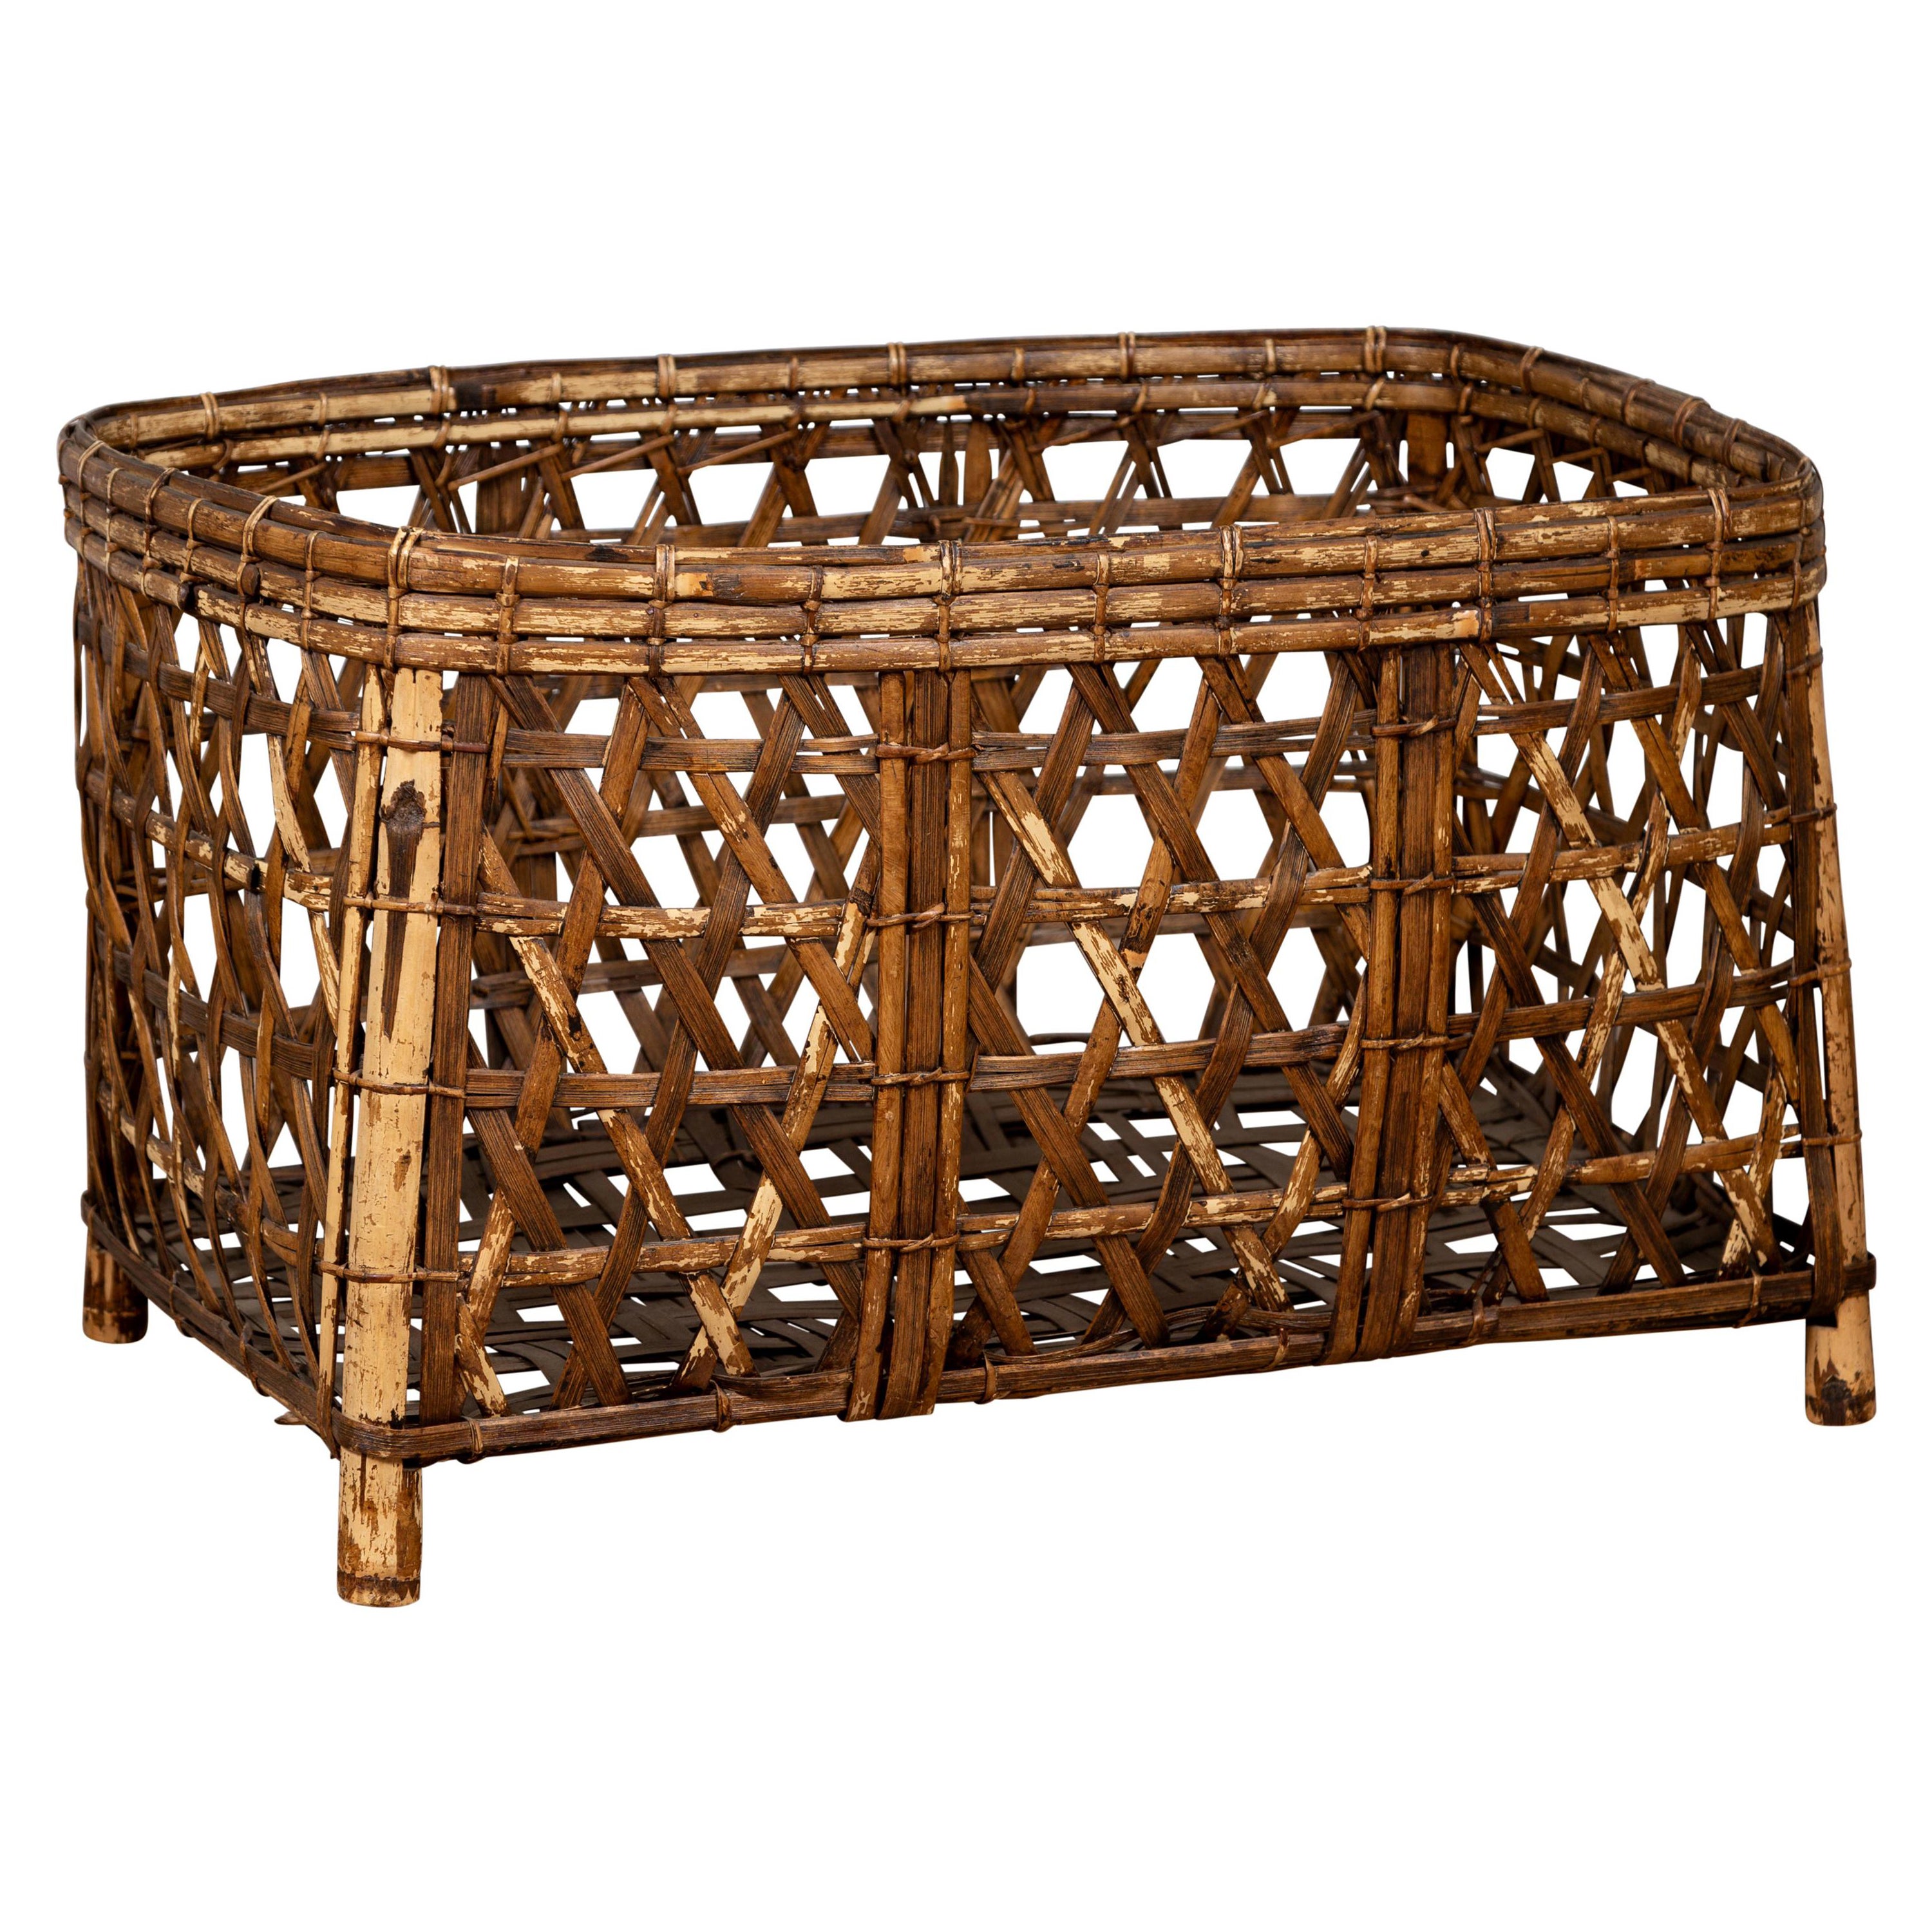 Large Midcentury Bamboo Fretwork Basket Raised on Short Feet, circa 1950 For Sale